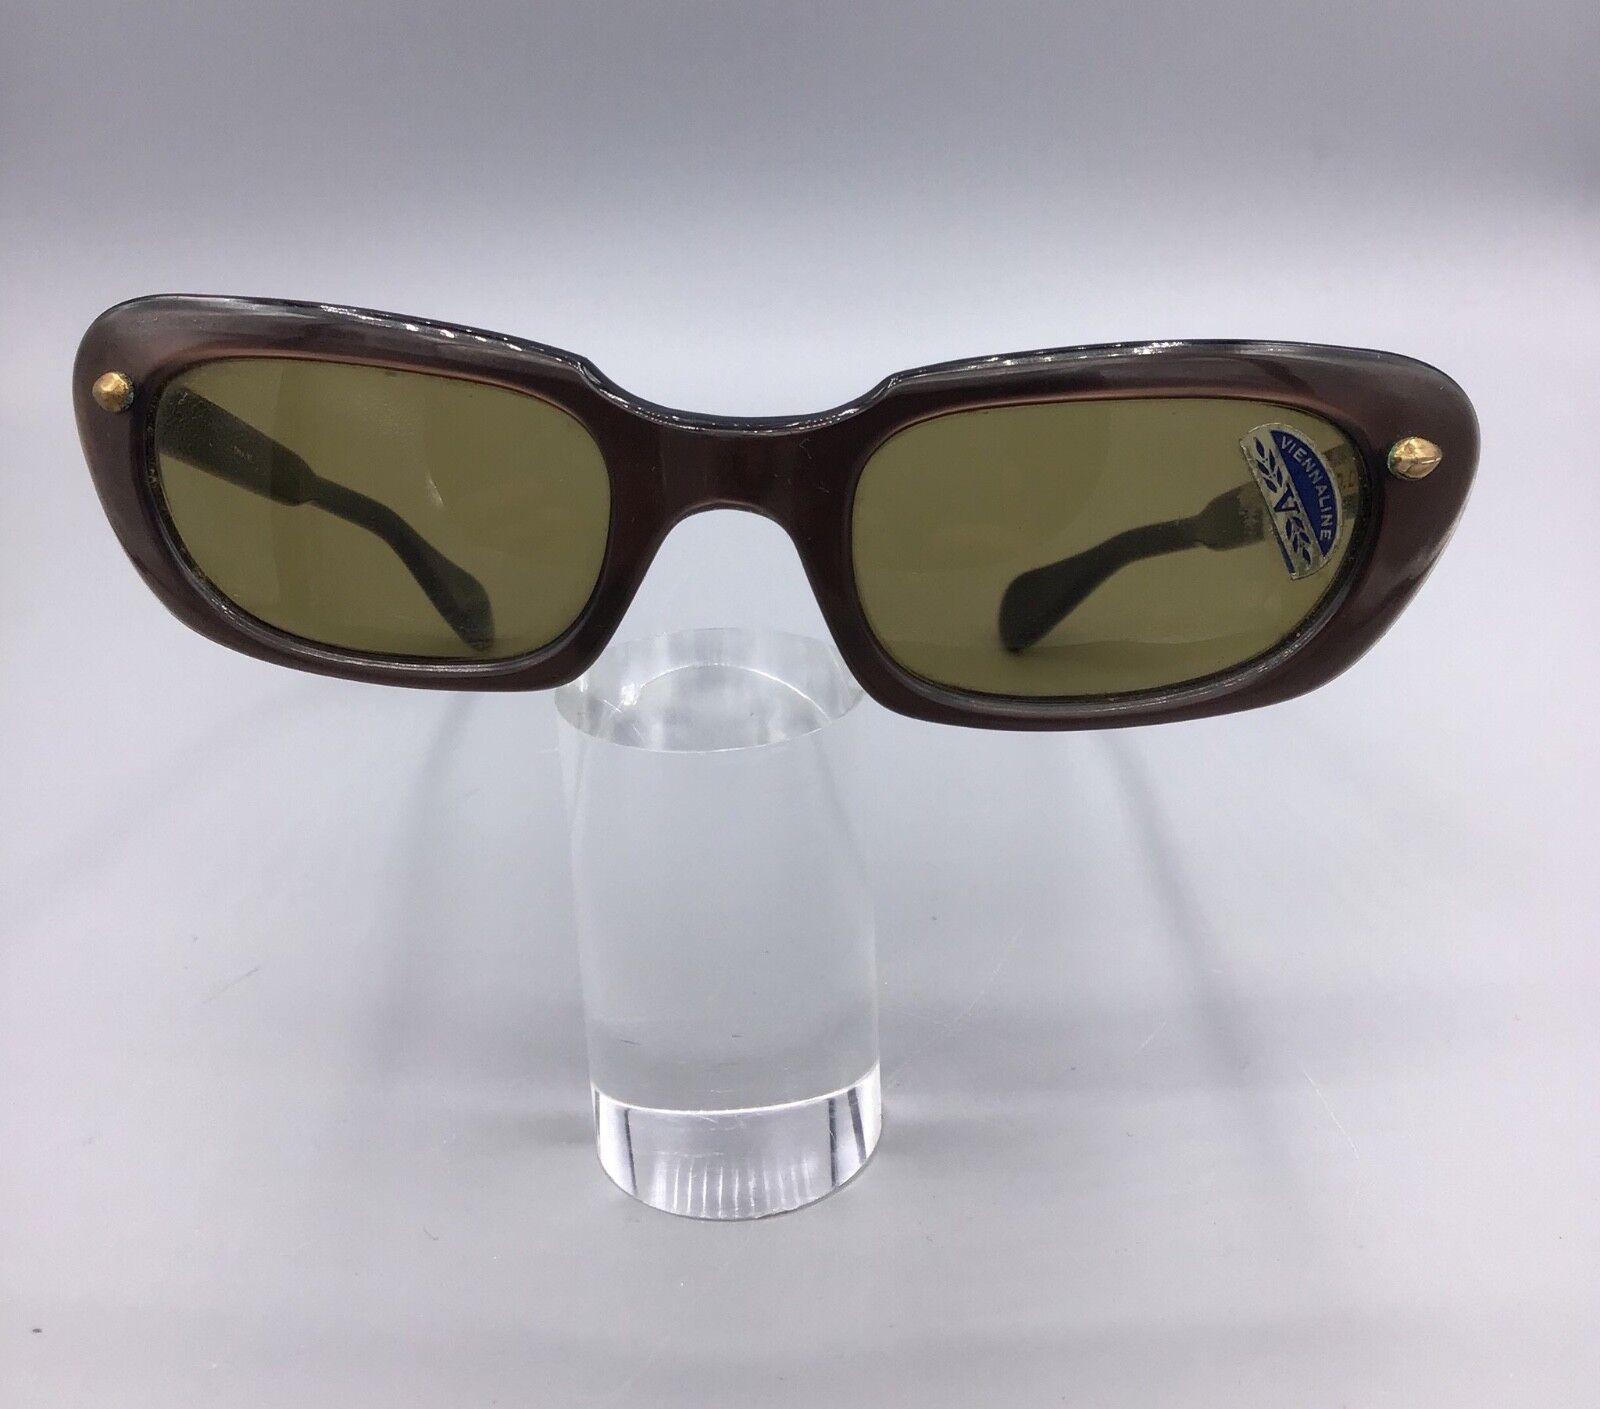 ViennaLine occhiale vintage da sole Sunglasses sonnenbrillen lunettes gafas sol